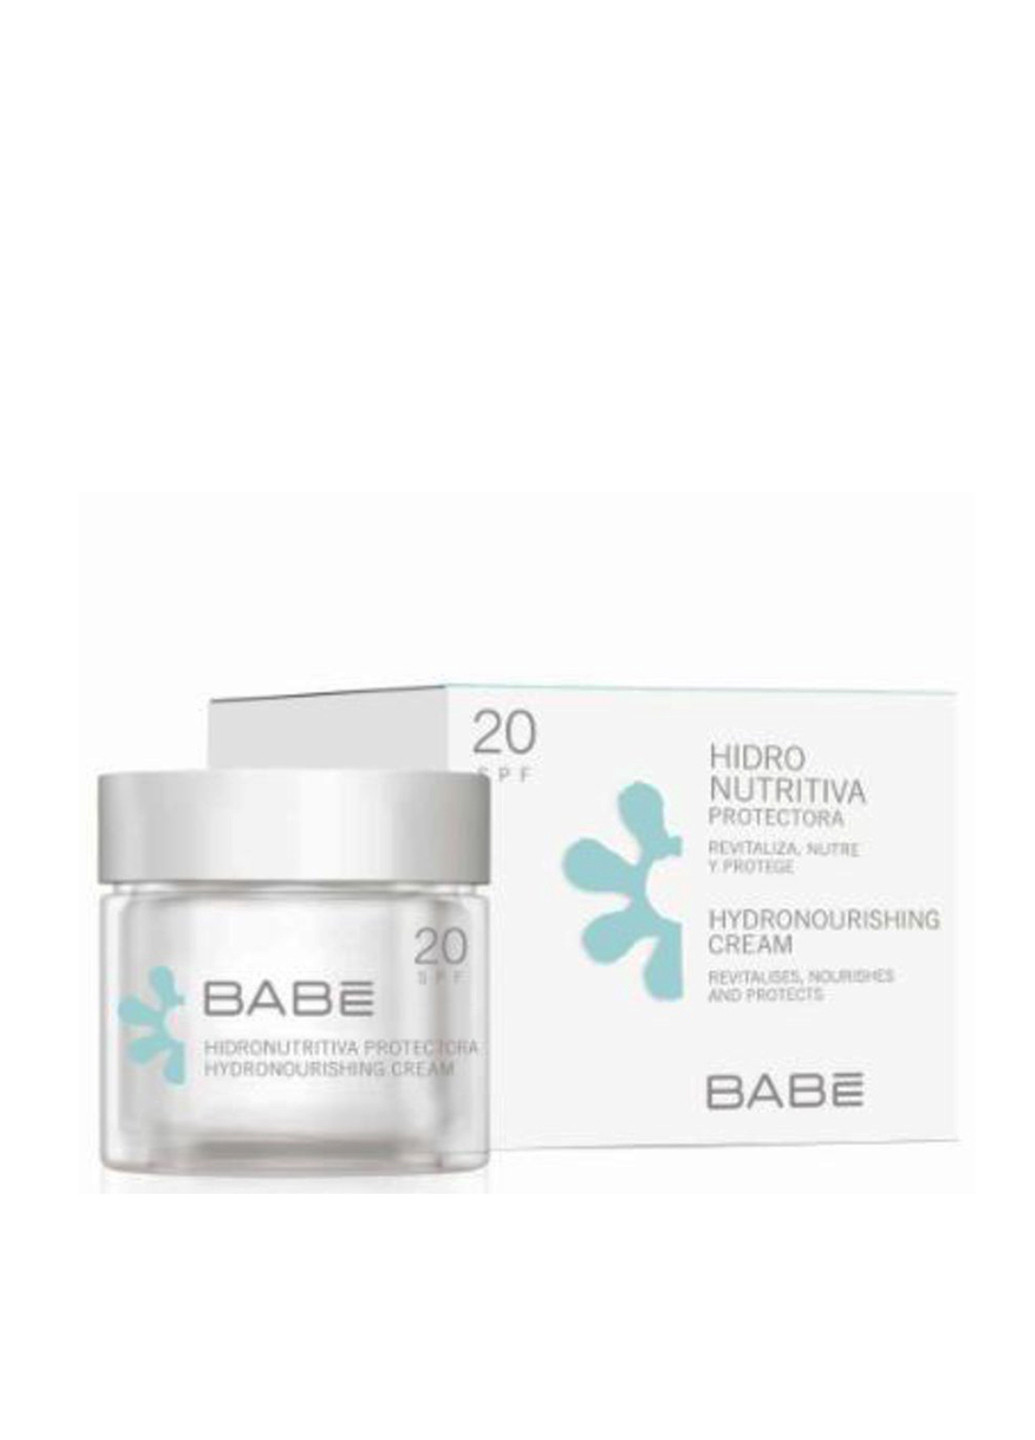 Увлажняющий питательный крем с SPF 20 для лица BABE Face Hydronourishing Cream SPF 20 50 мл Babe Laboratorios (88102471)